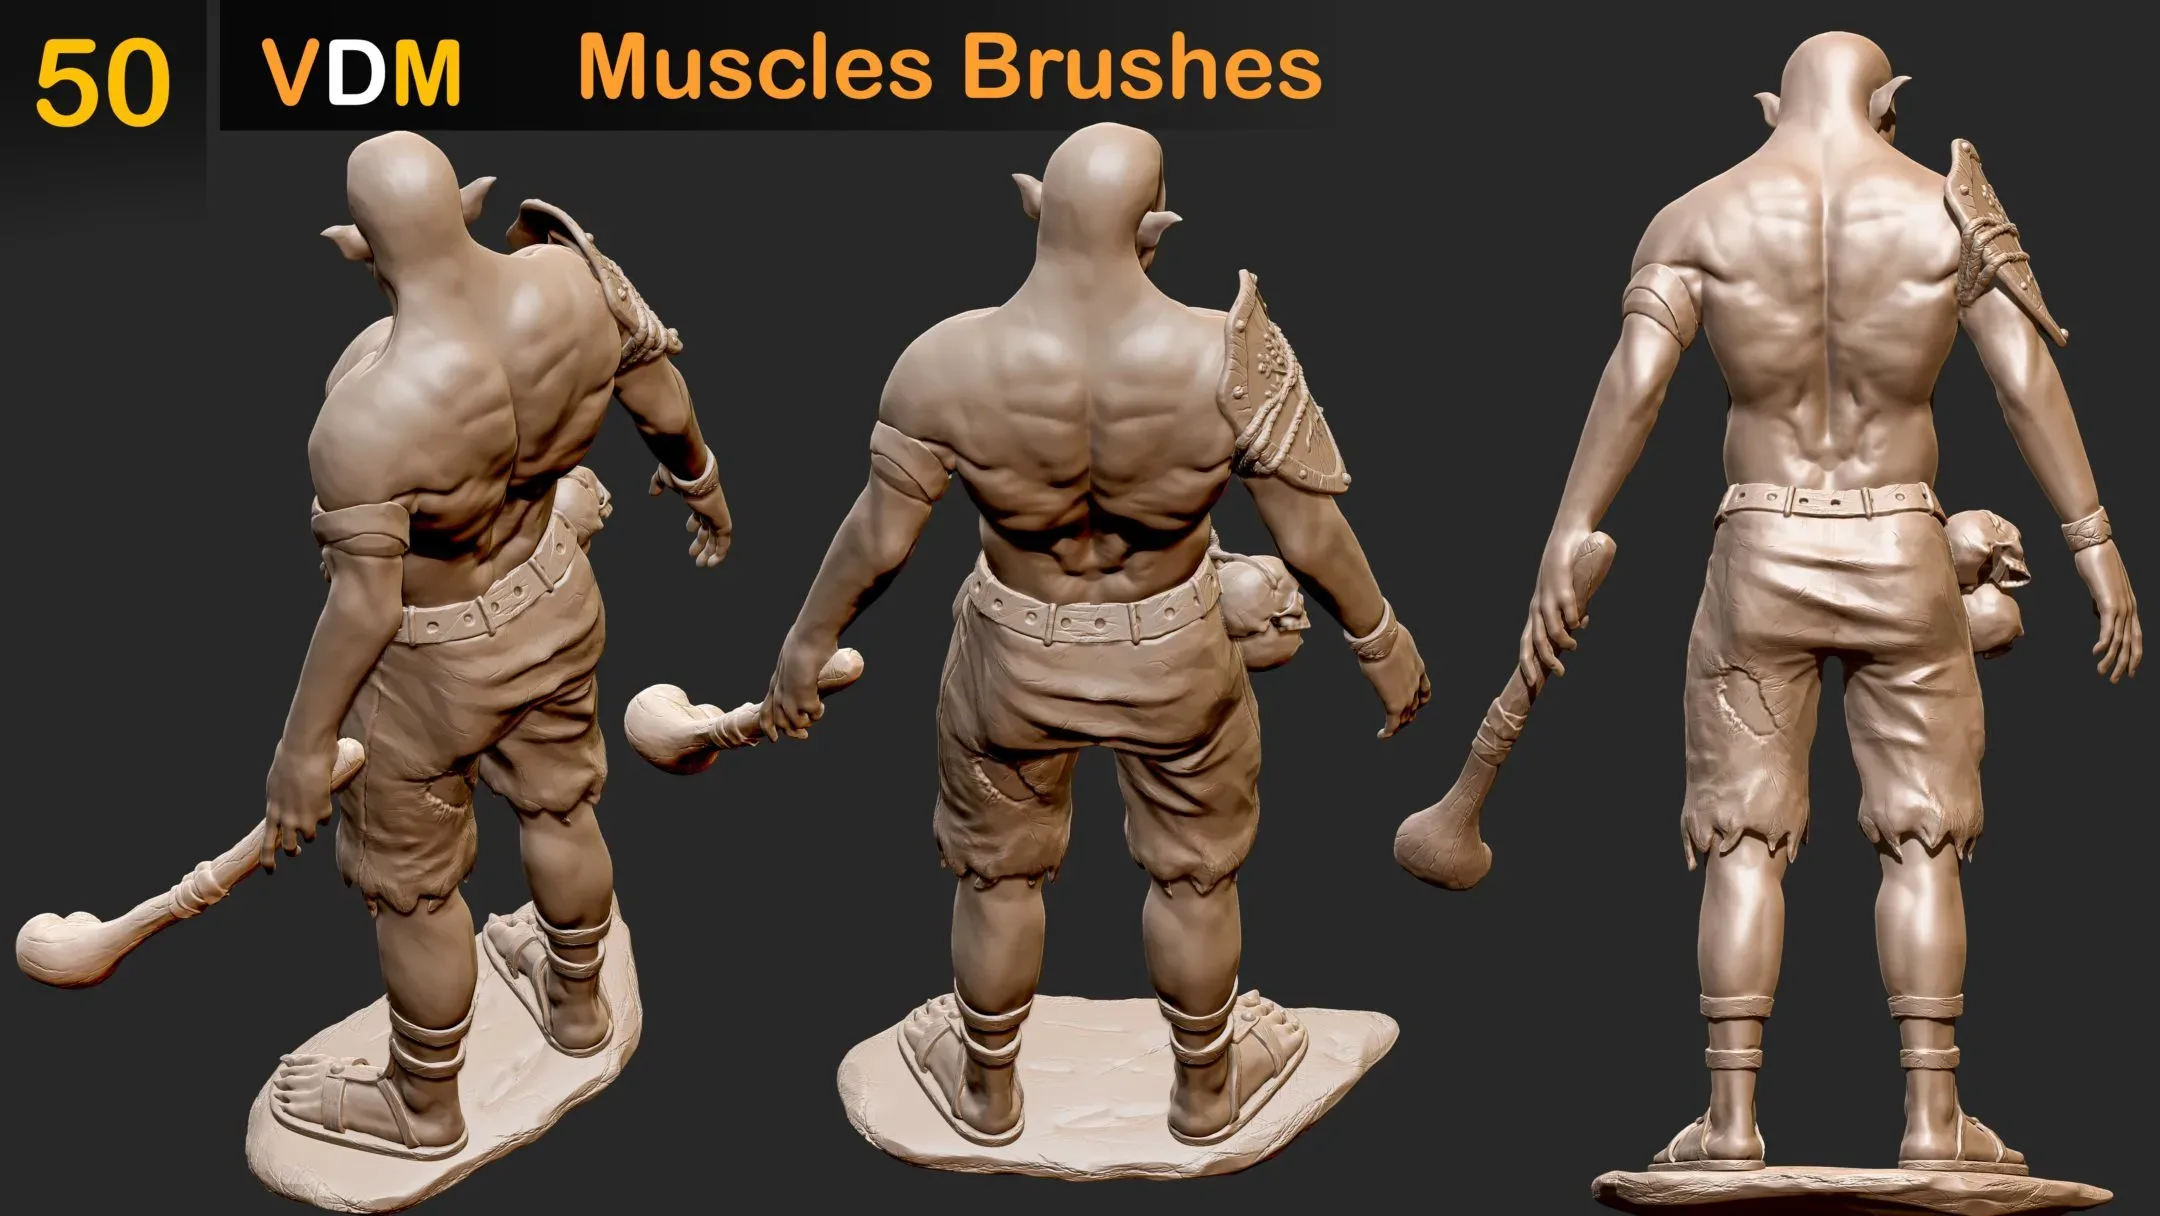 50 VDM Muscles Brushes _Vol 02